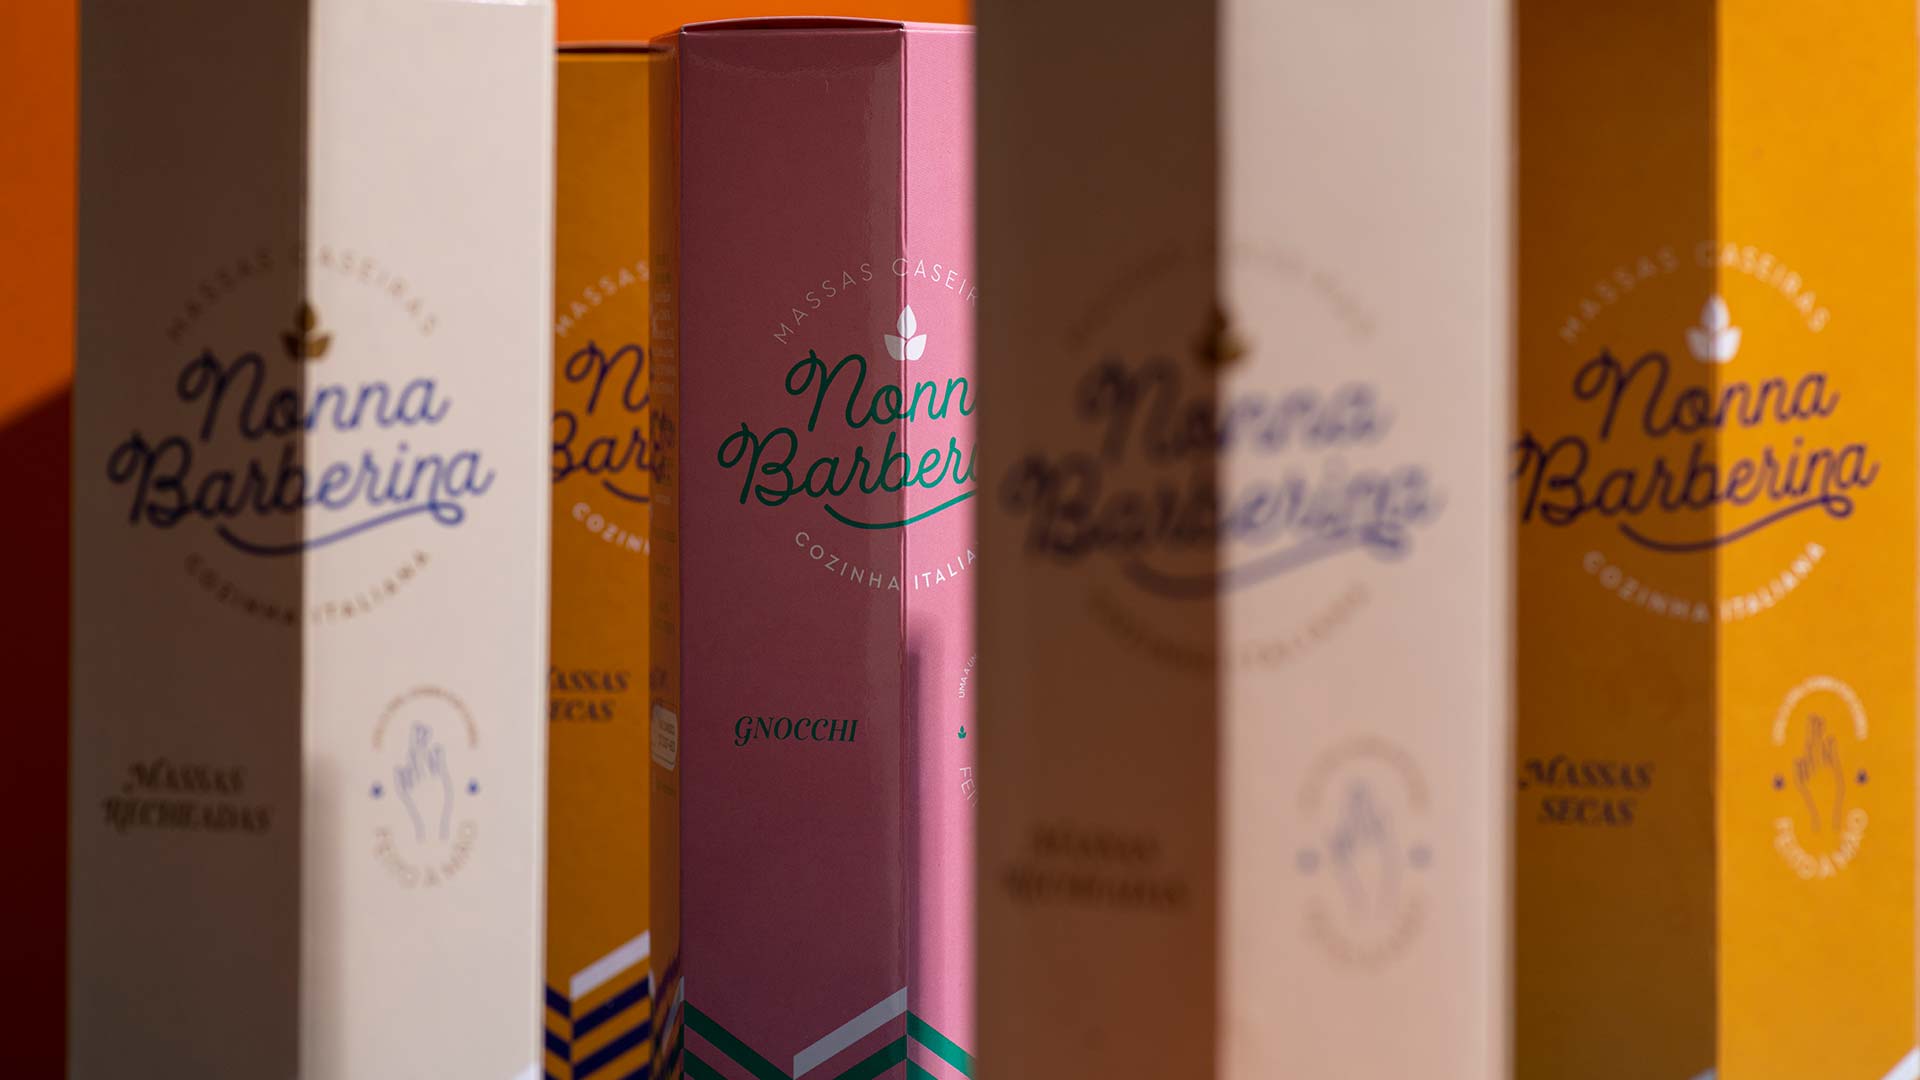 Nonna Barberina Packaging - Ave Design